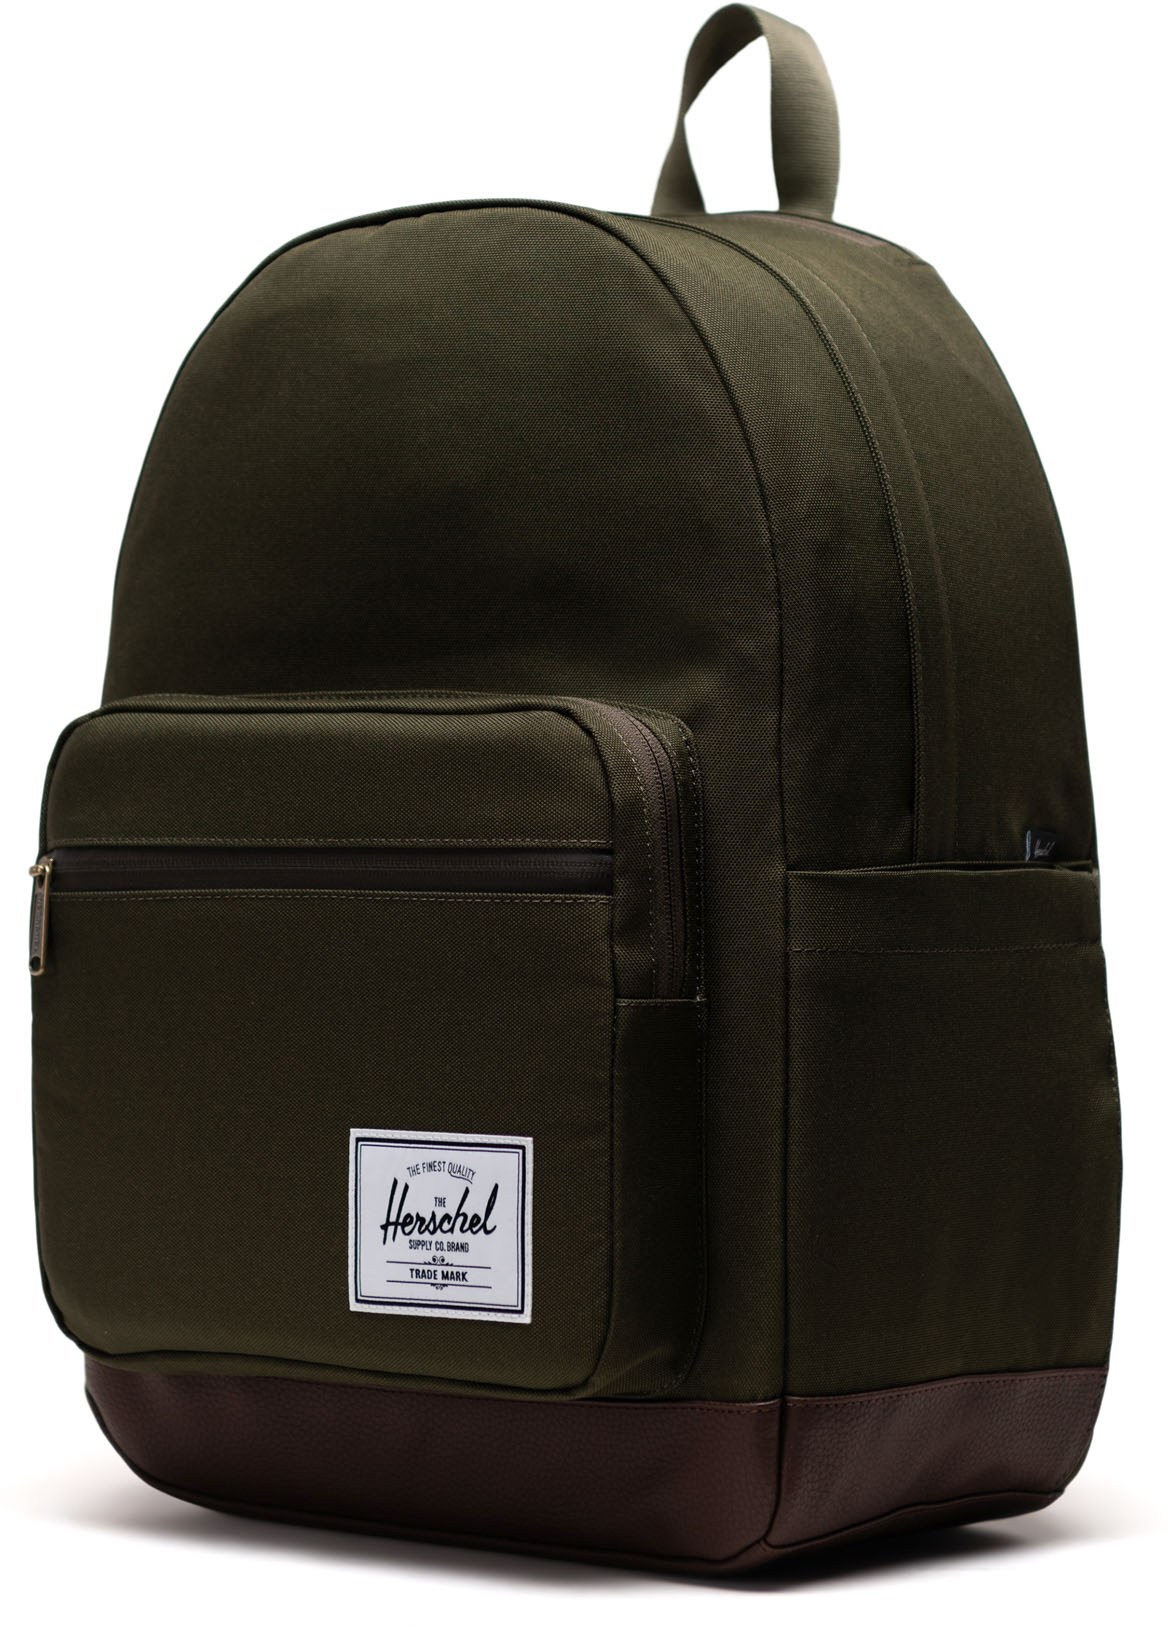 рюкзак pop quiz backpack herschel supply co цвет light taupe chicory coffee Пакет поп-викторин Herschel Supply Co., зеленый